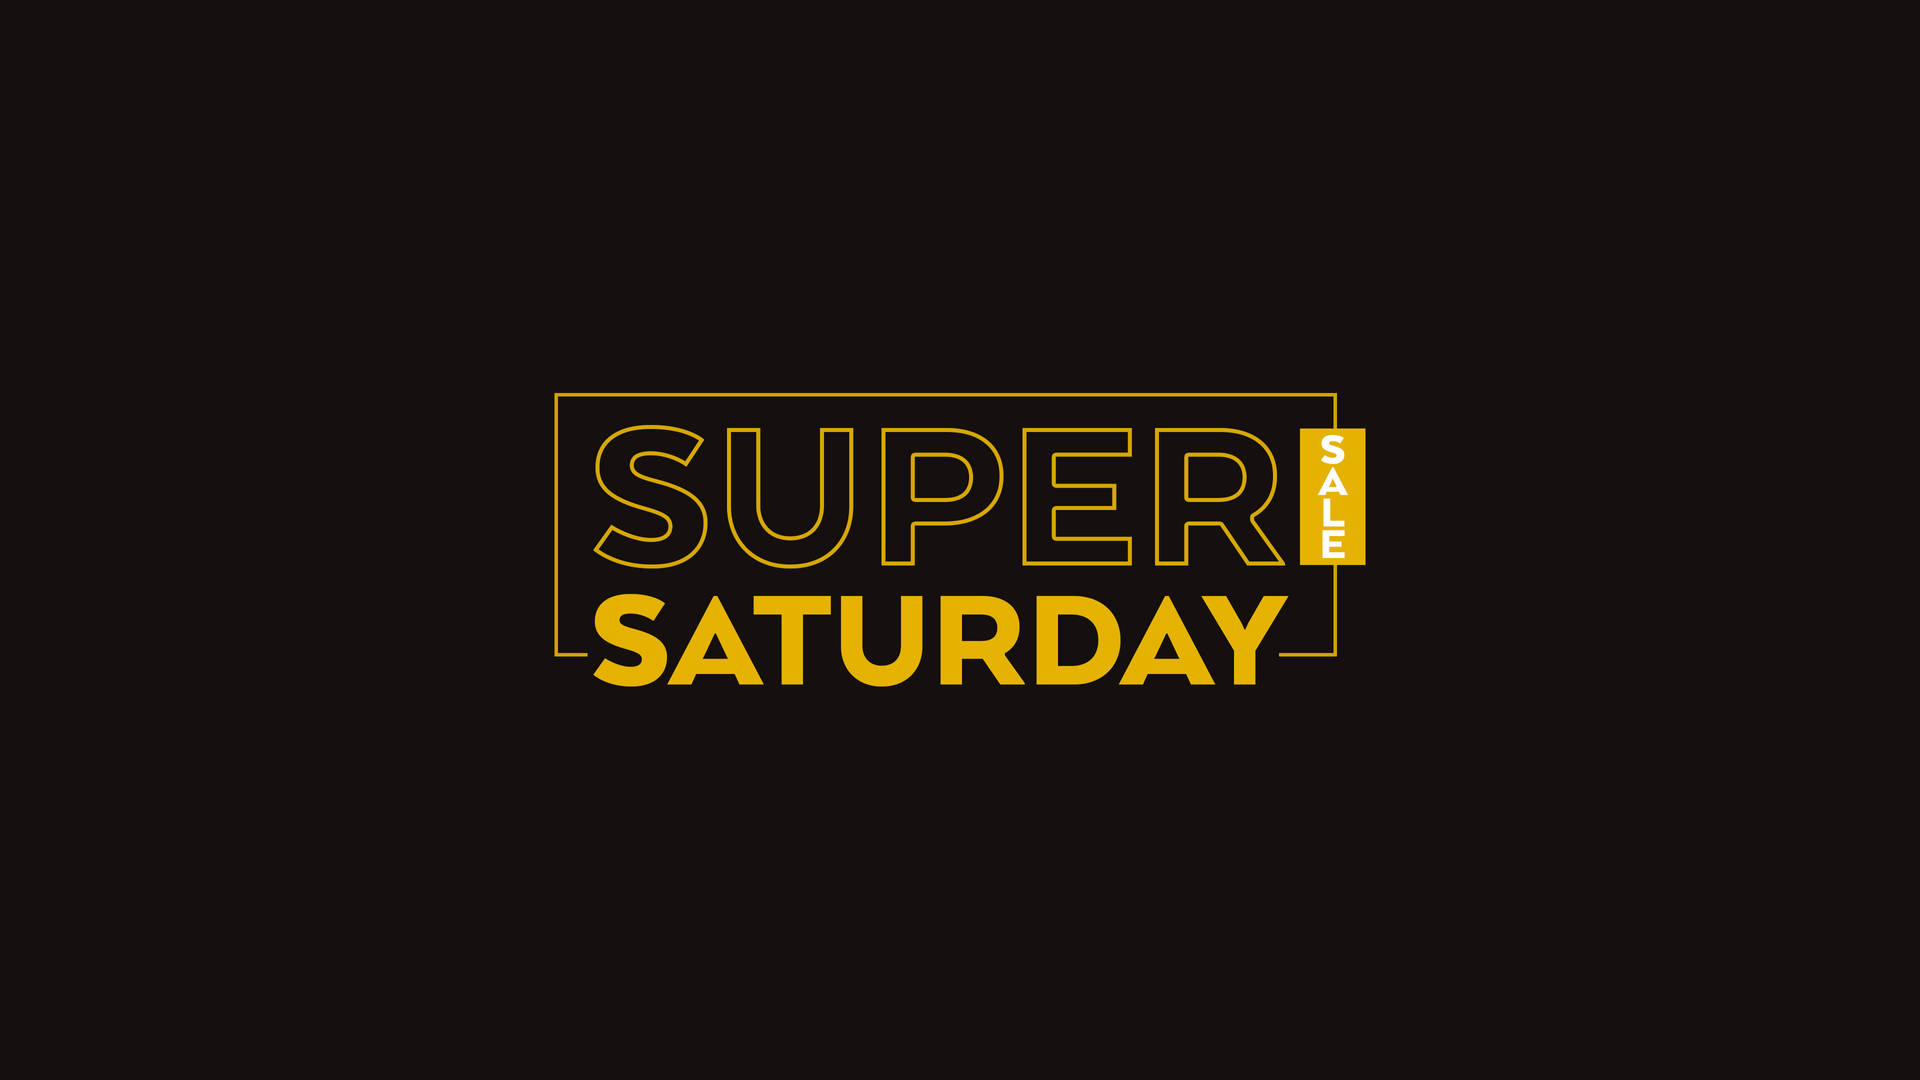 Super Saturday Sale Yellow Font Background